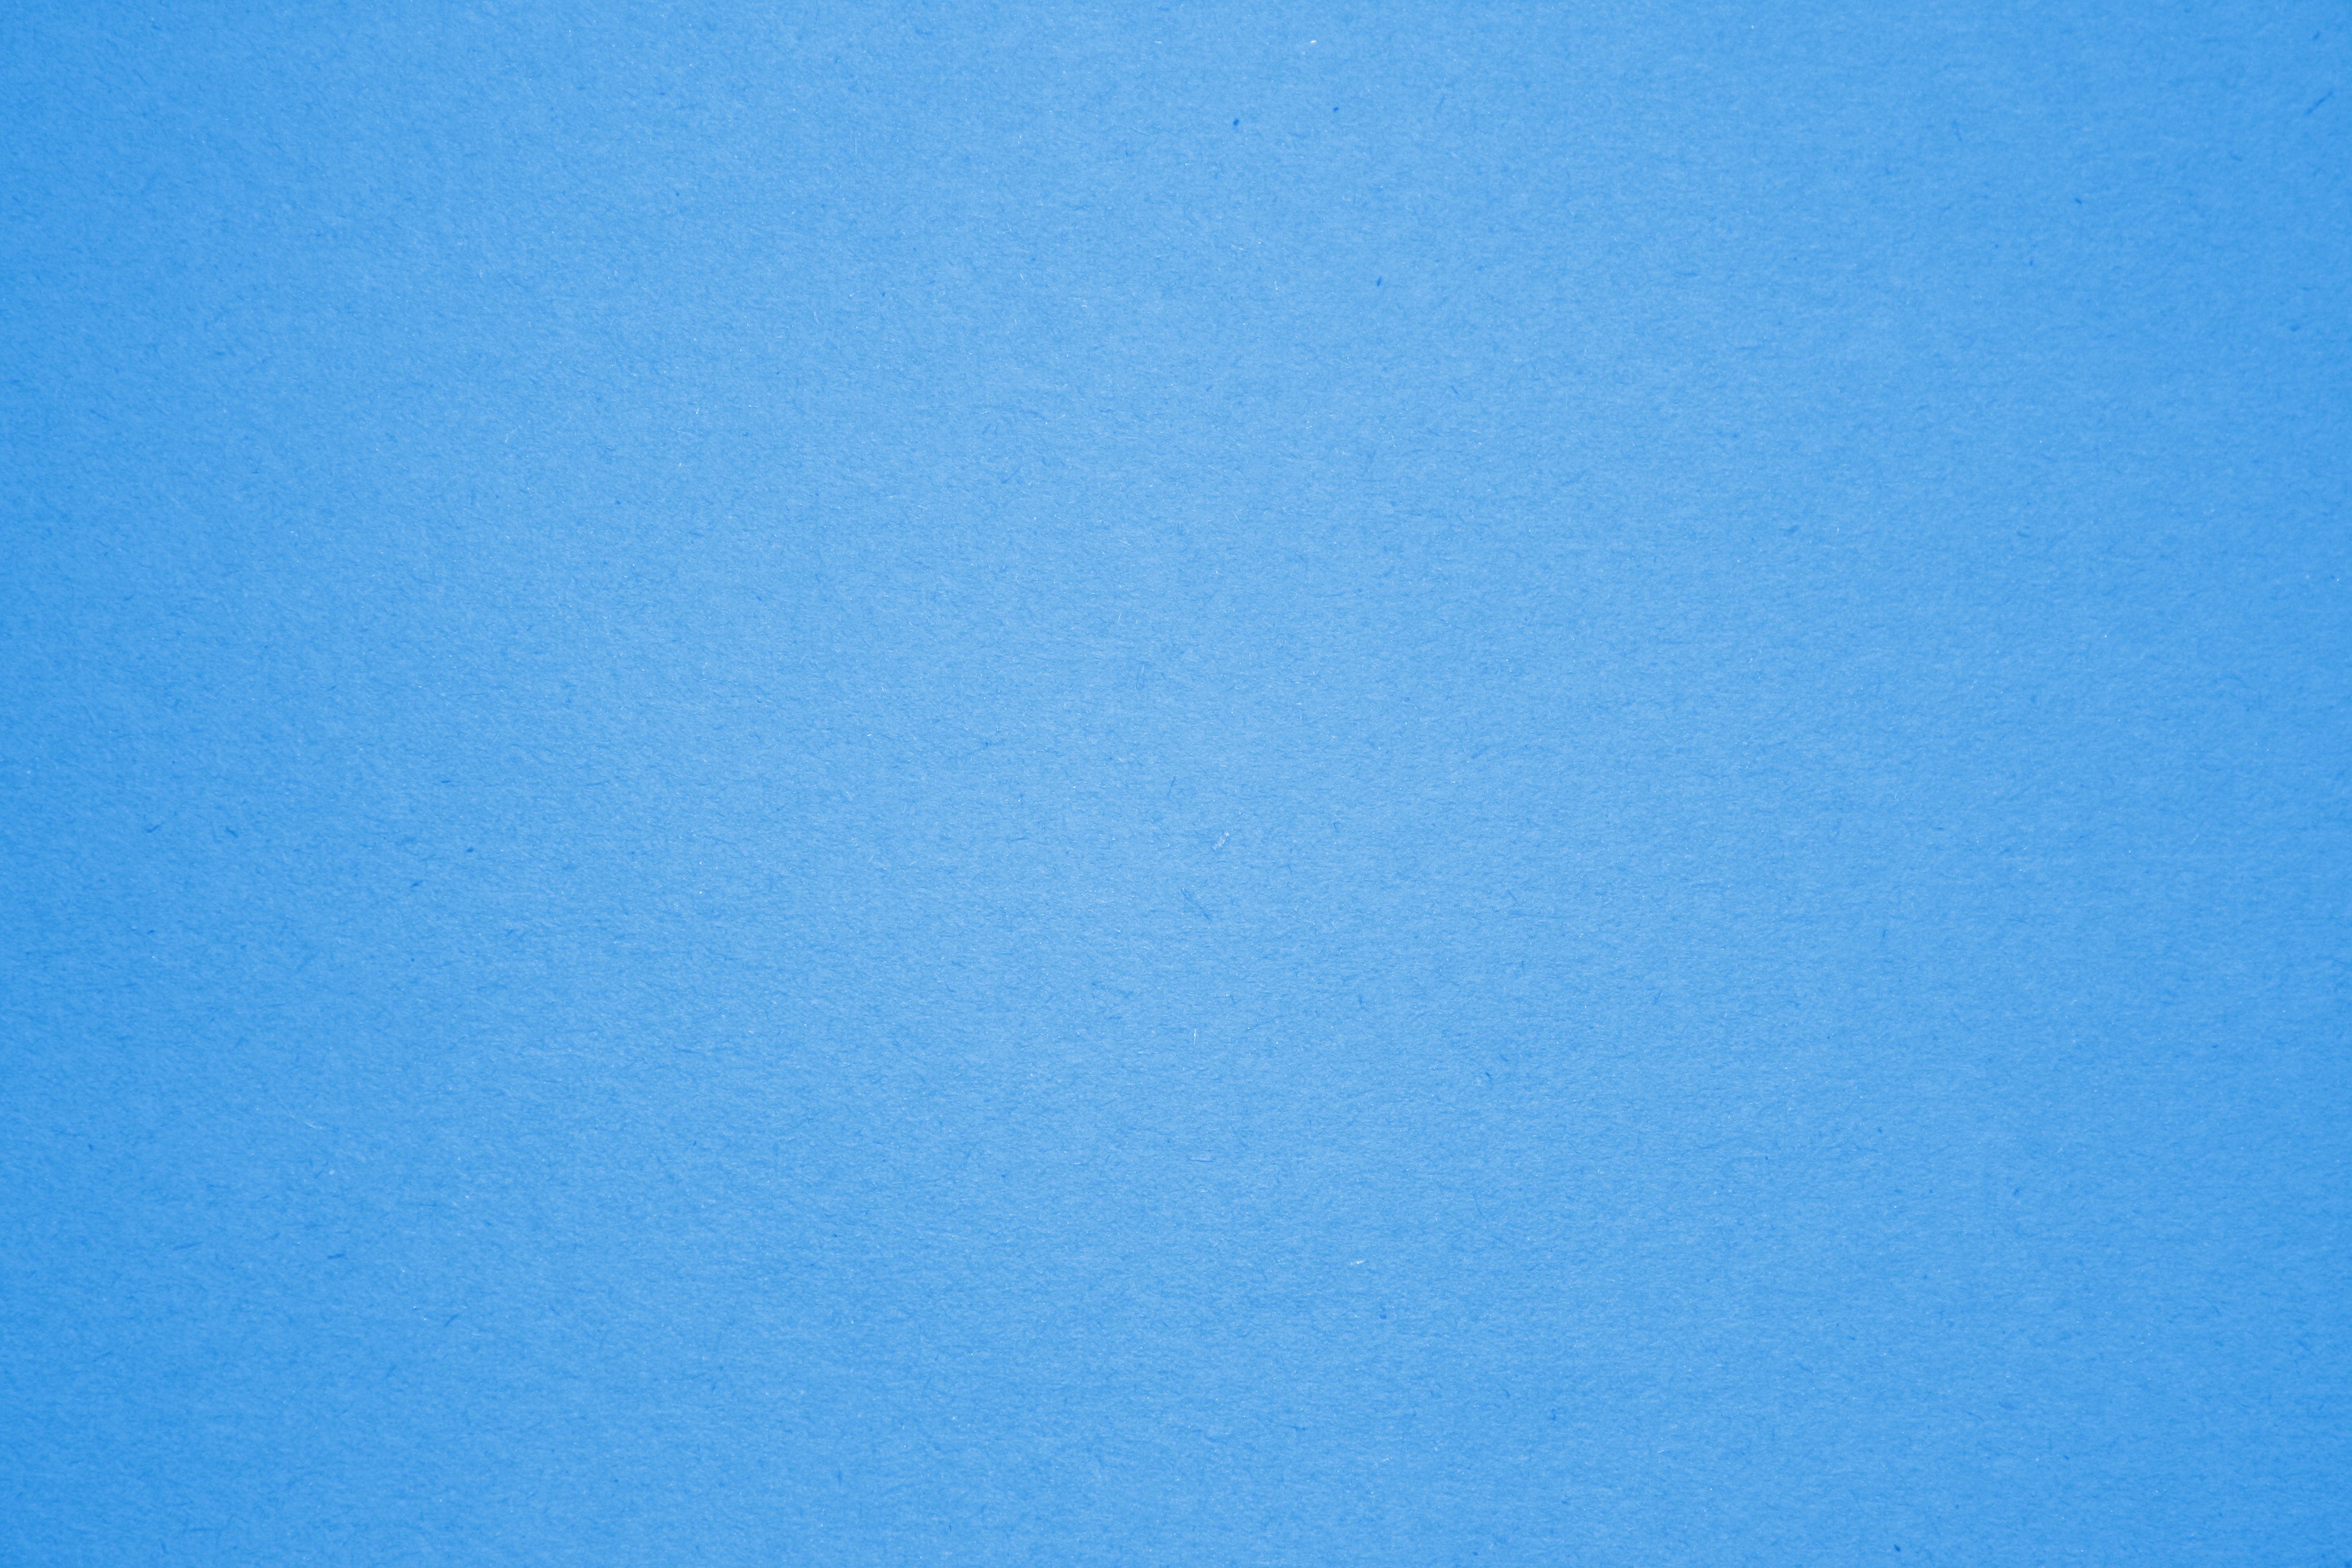 Bright Blue Paper